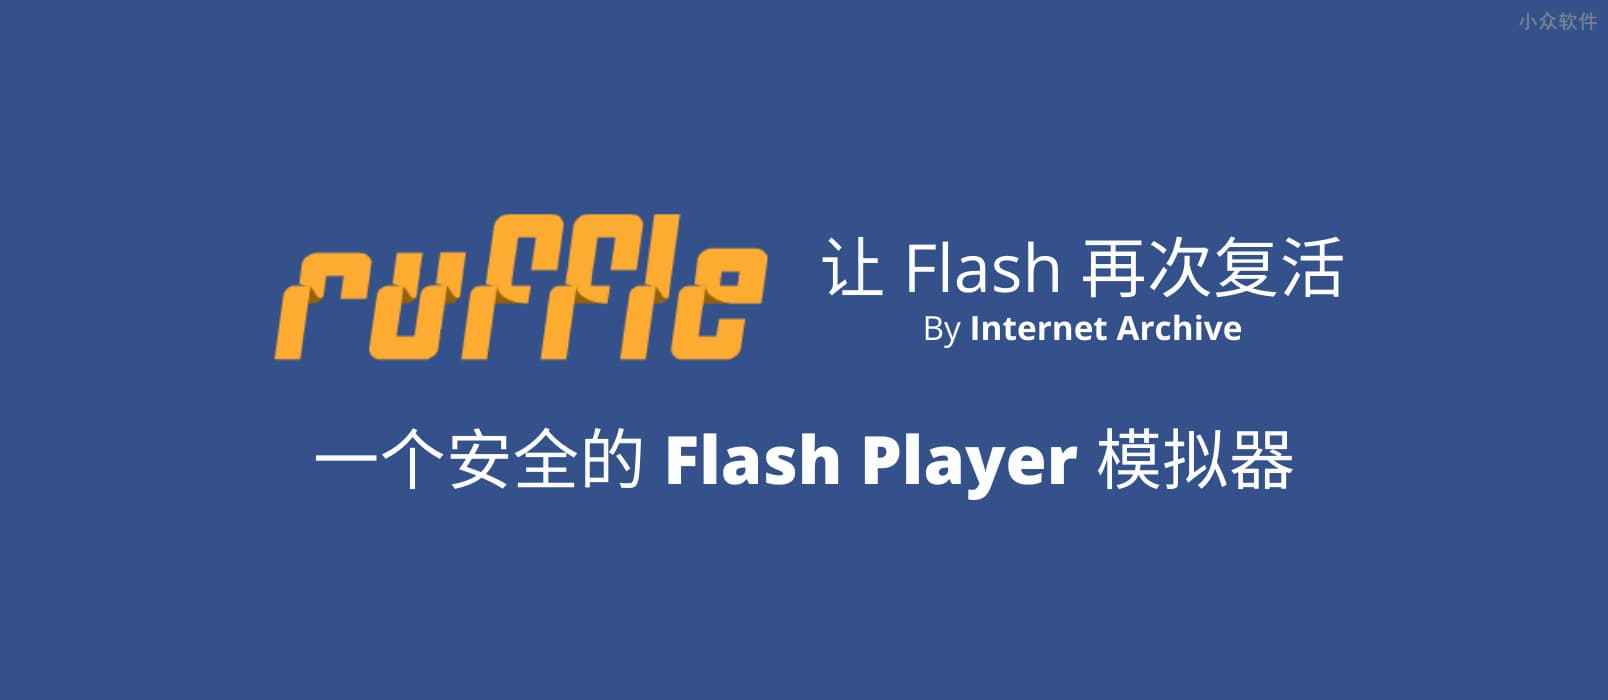 Ruffle - 互联网档案馆 Internet Archive 发布开源 Flash Player 模拟器，让 Flash 复活